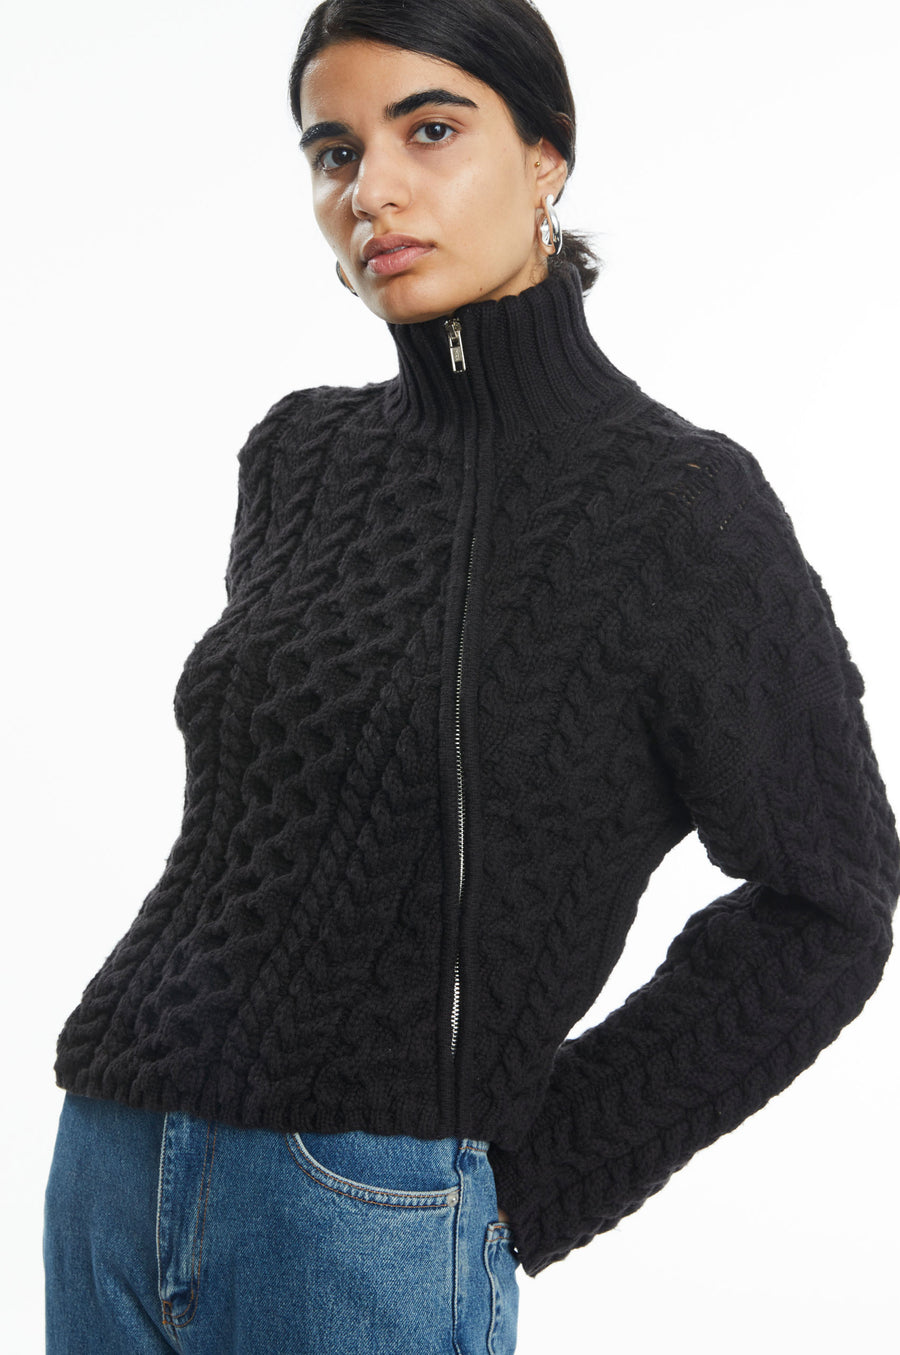 OSGreat knit zip